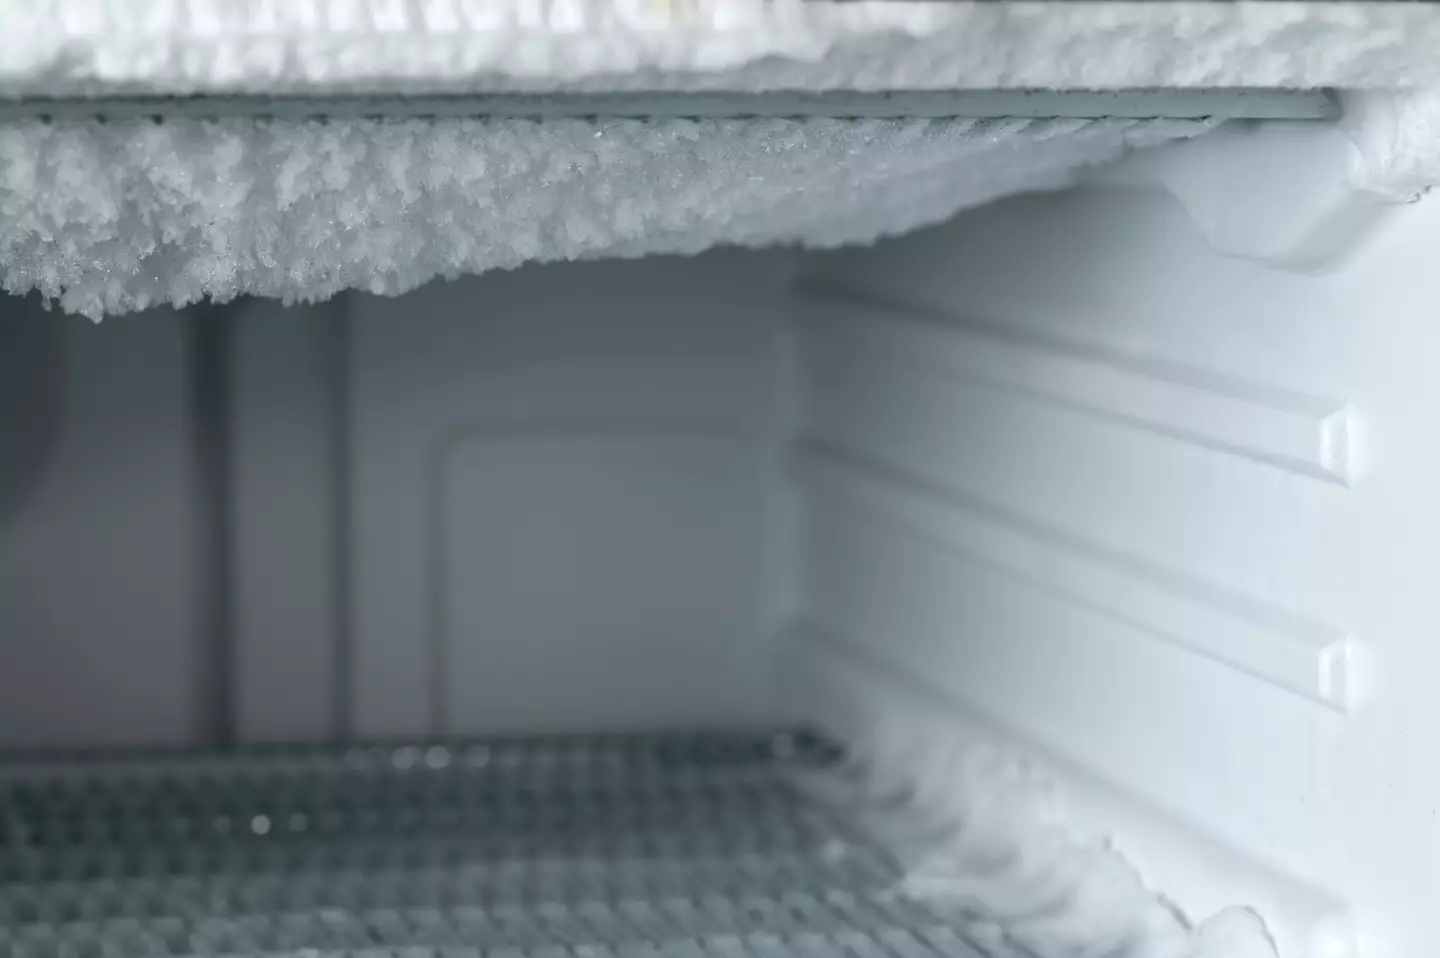 Do you defrost your freezer?